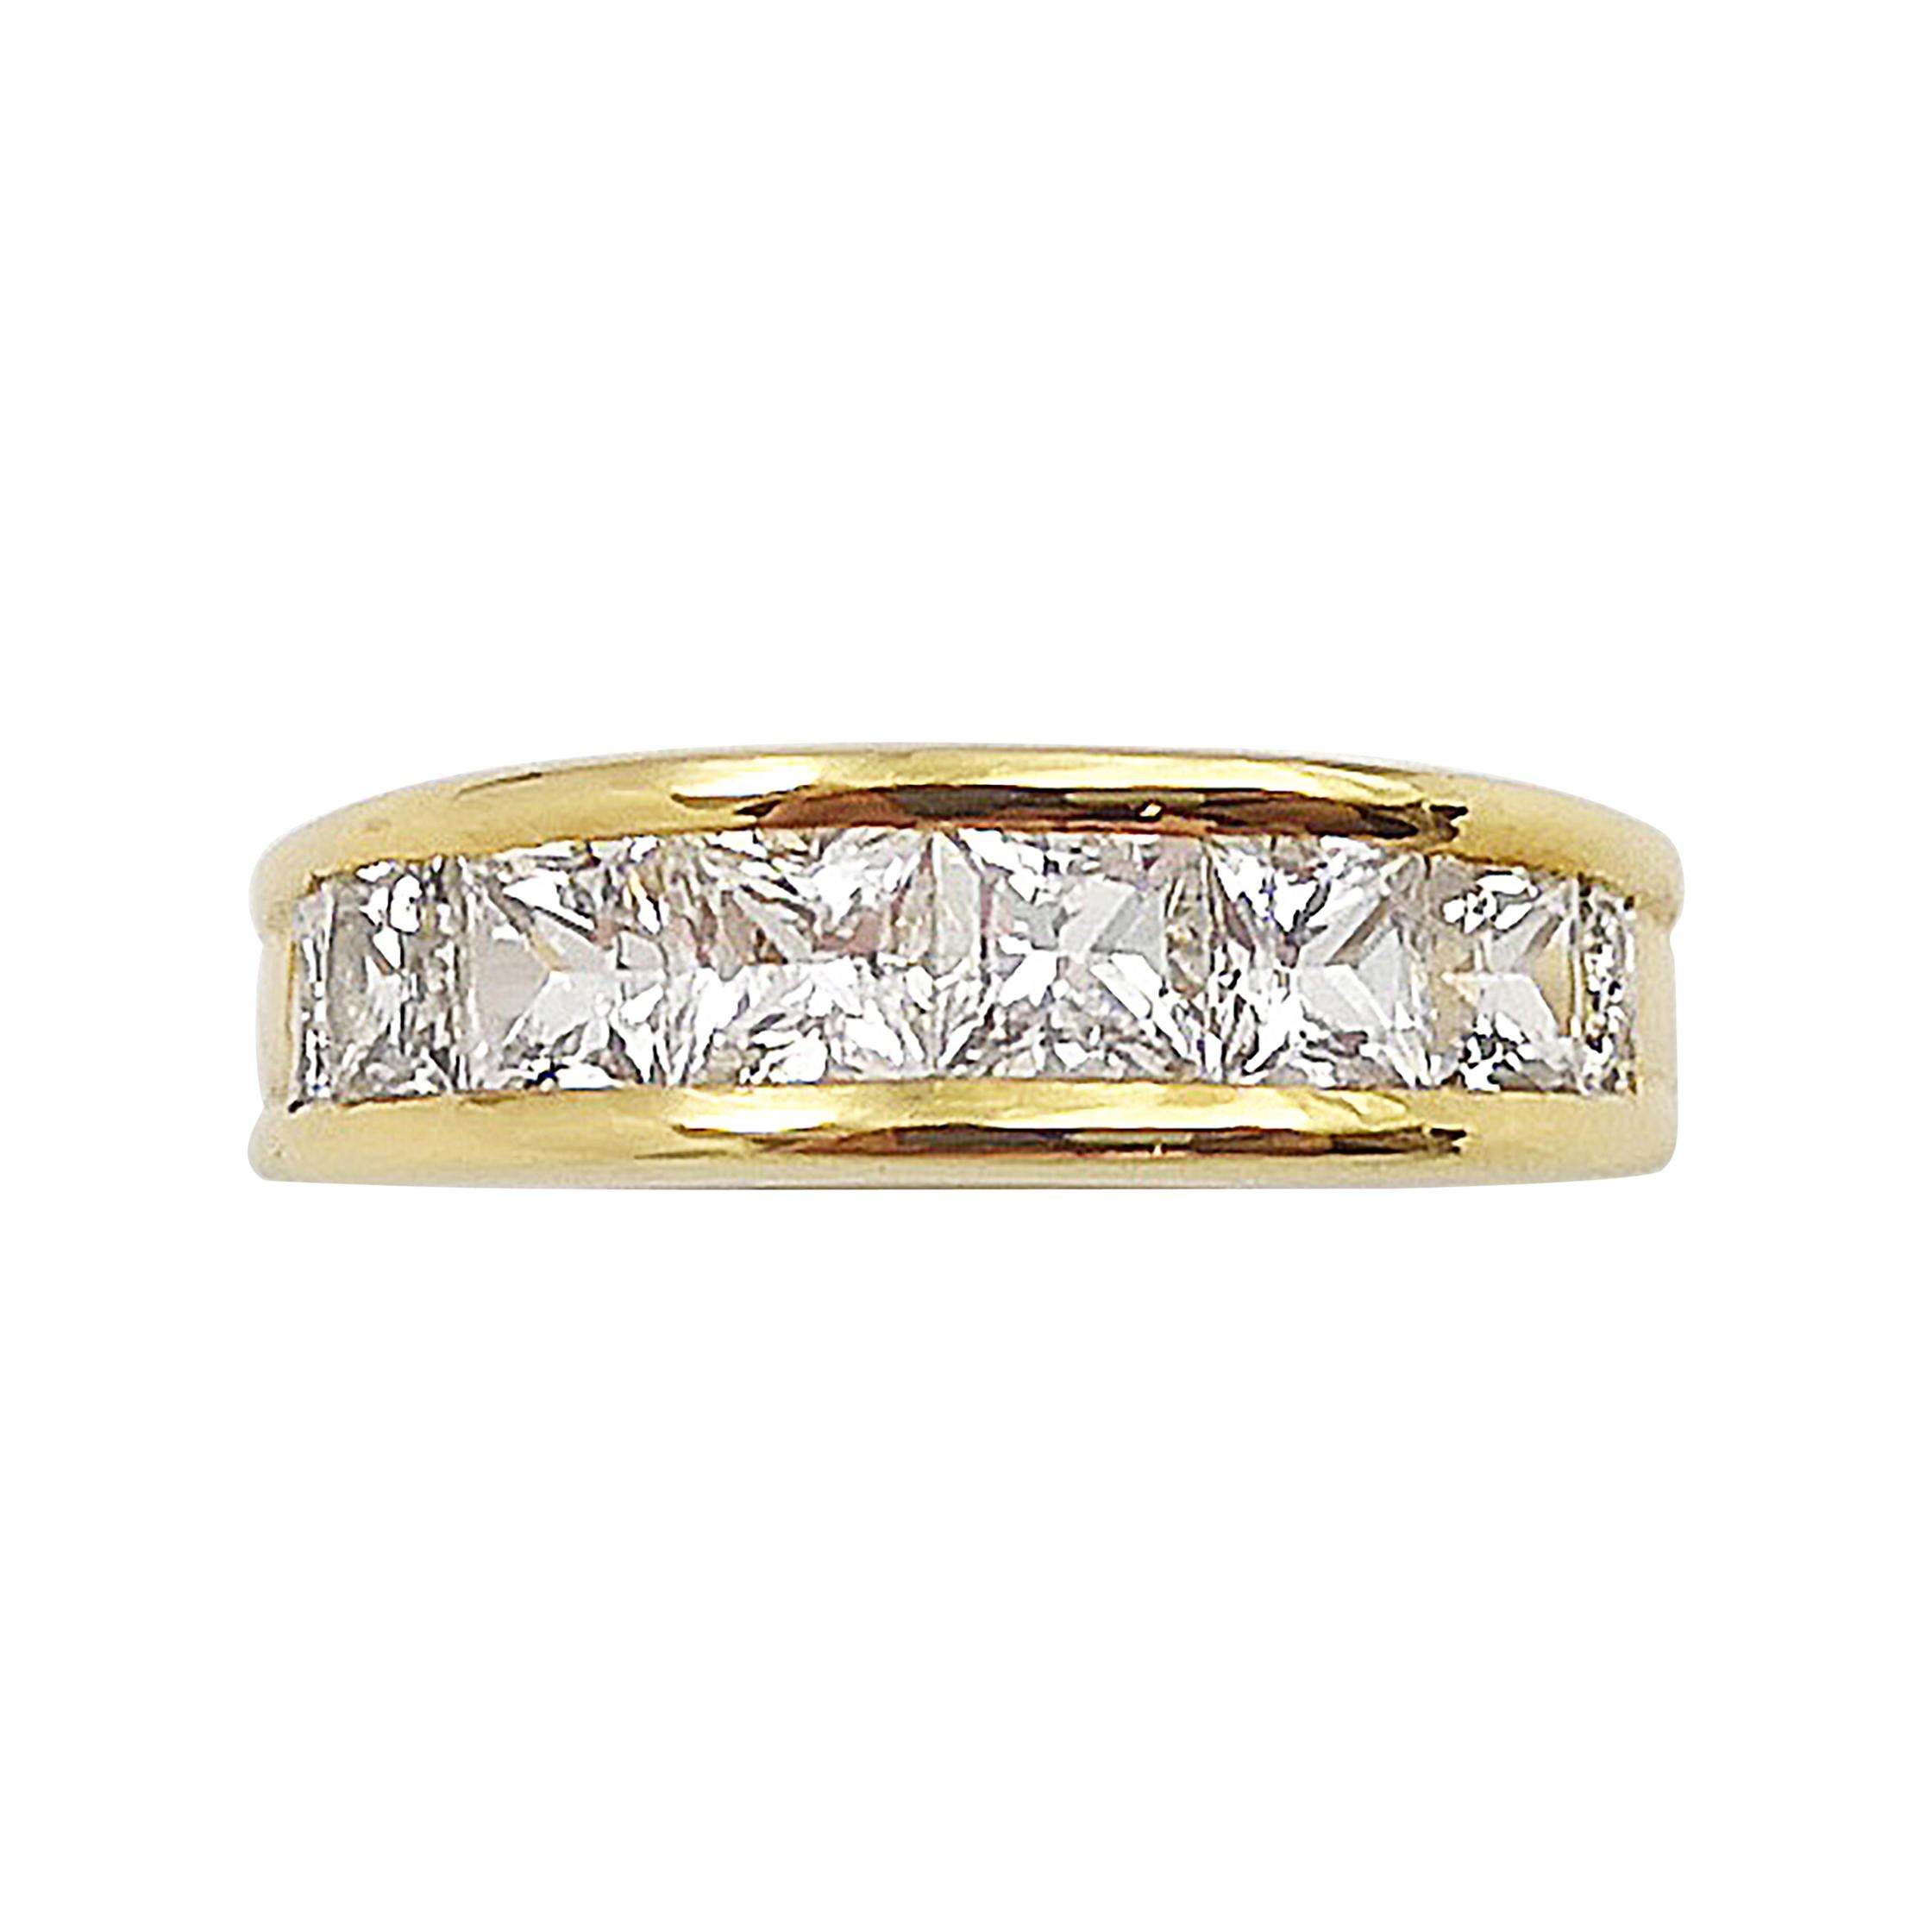 White Sapphire with Diamond Ring Set in 18 Karat Gold Settings